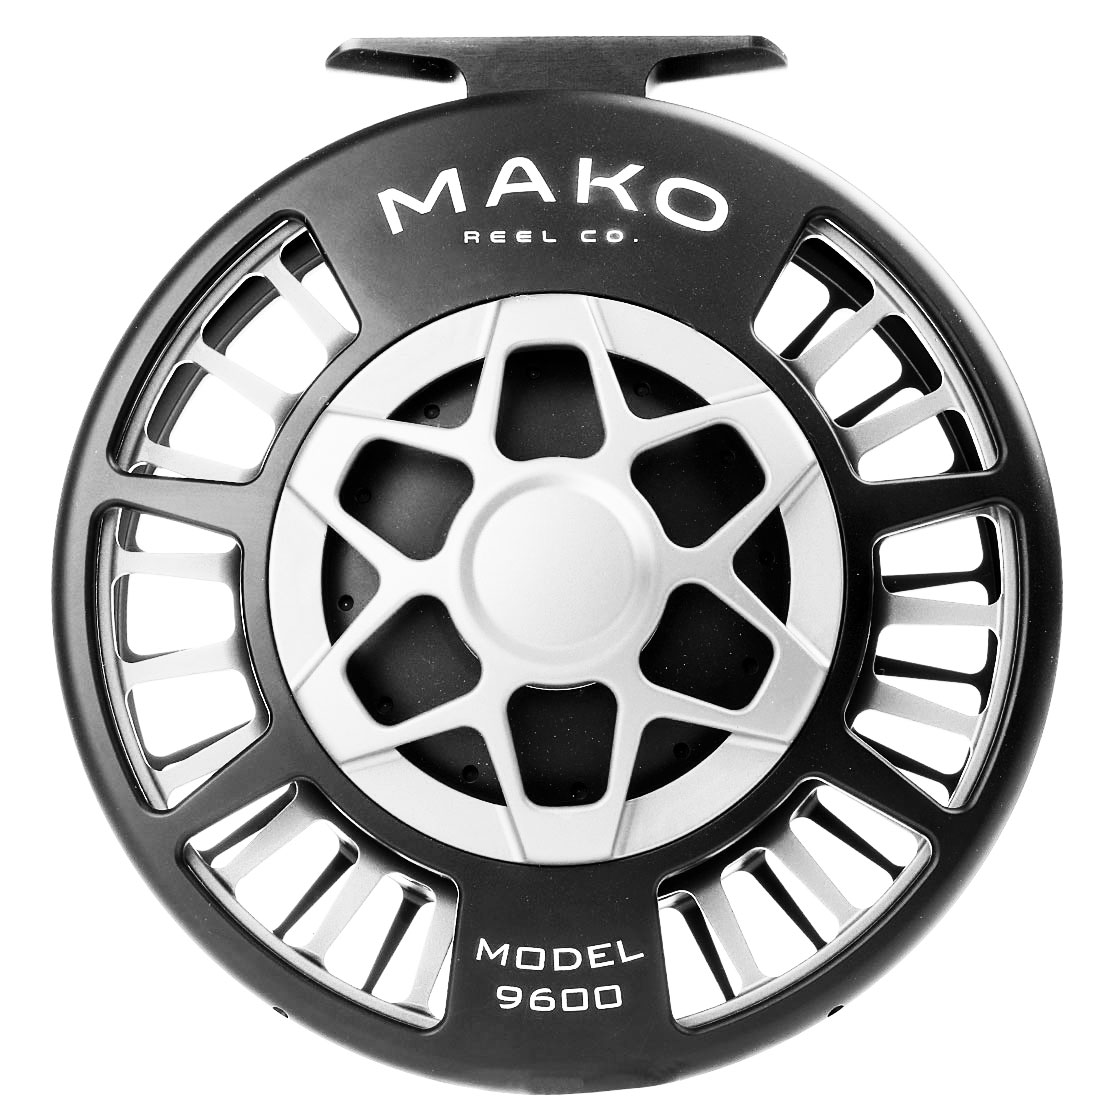 Mako Reel Co. Fly Reel matte platinum on black, Reels